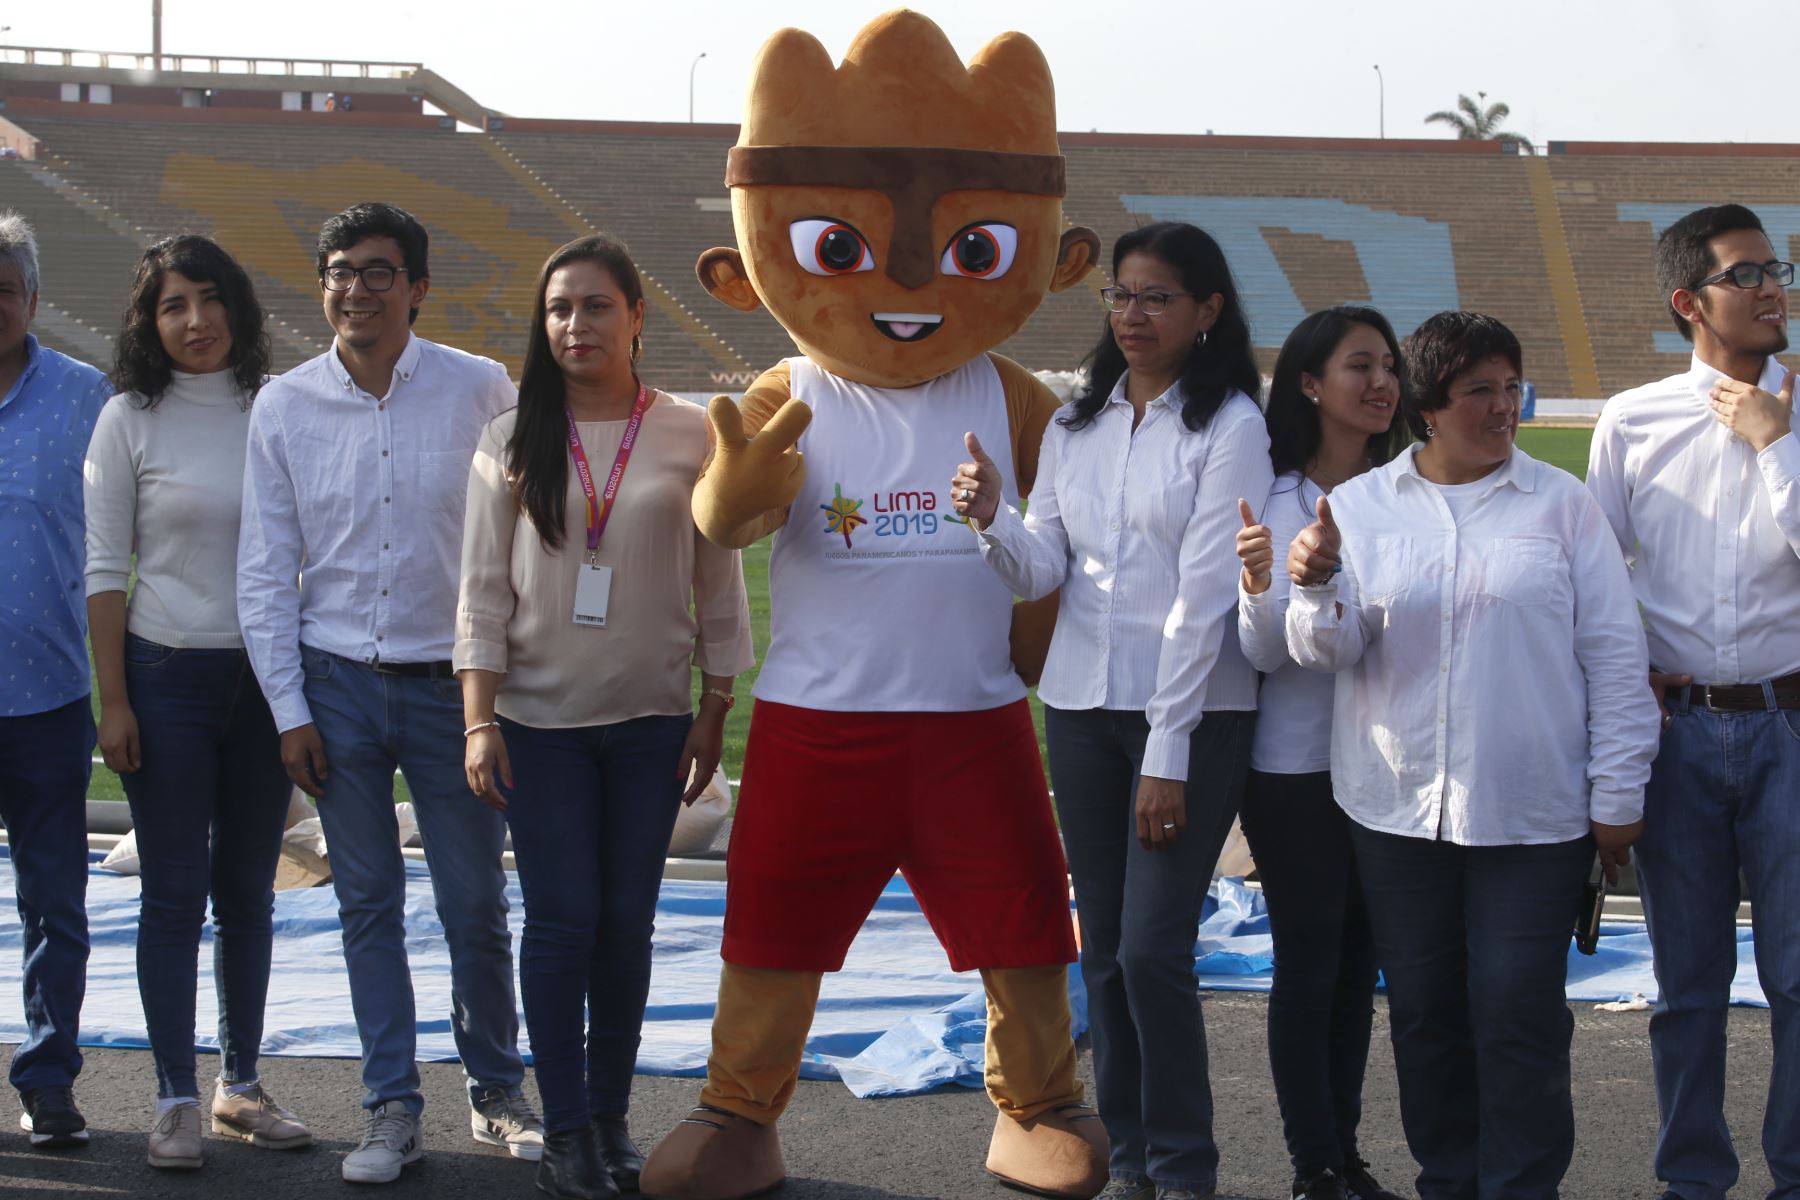 Esperan seleccionar a 19,000 voluntarios peruanos e internacionales para que apoyen XVIII Juegos Panamericanos y Paramericanos. ANDINA/Nathalie Sayago